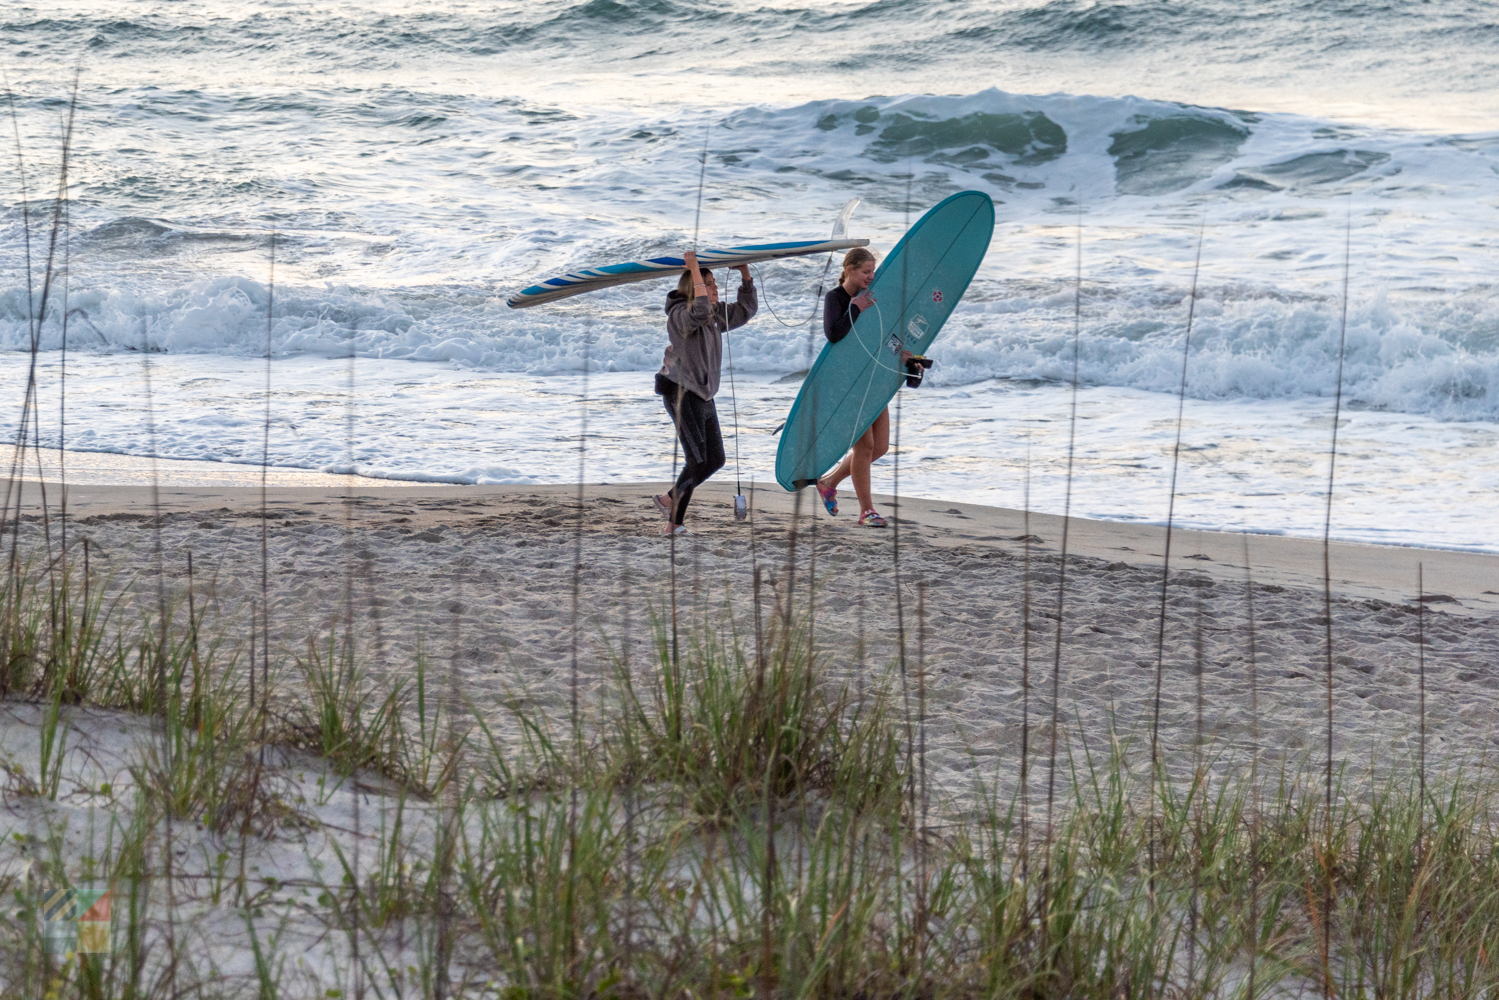 Wrightsville Beach surfers at sunrise